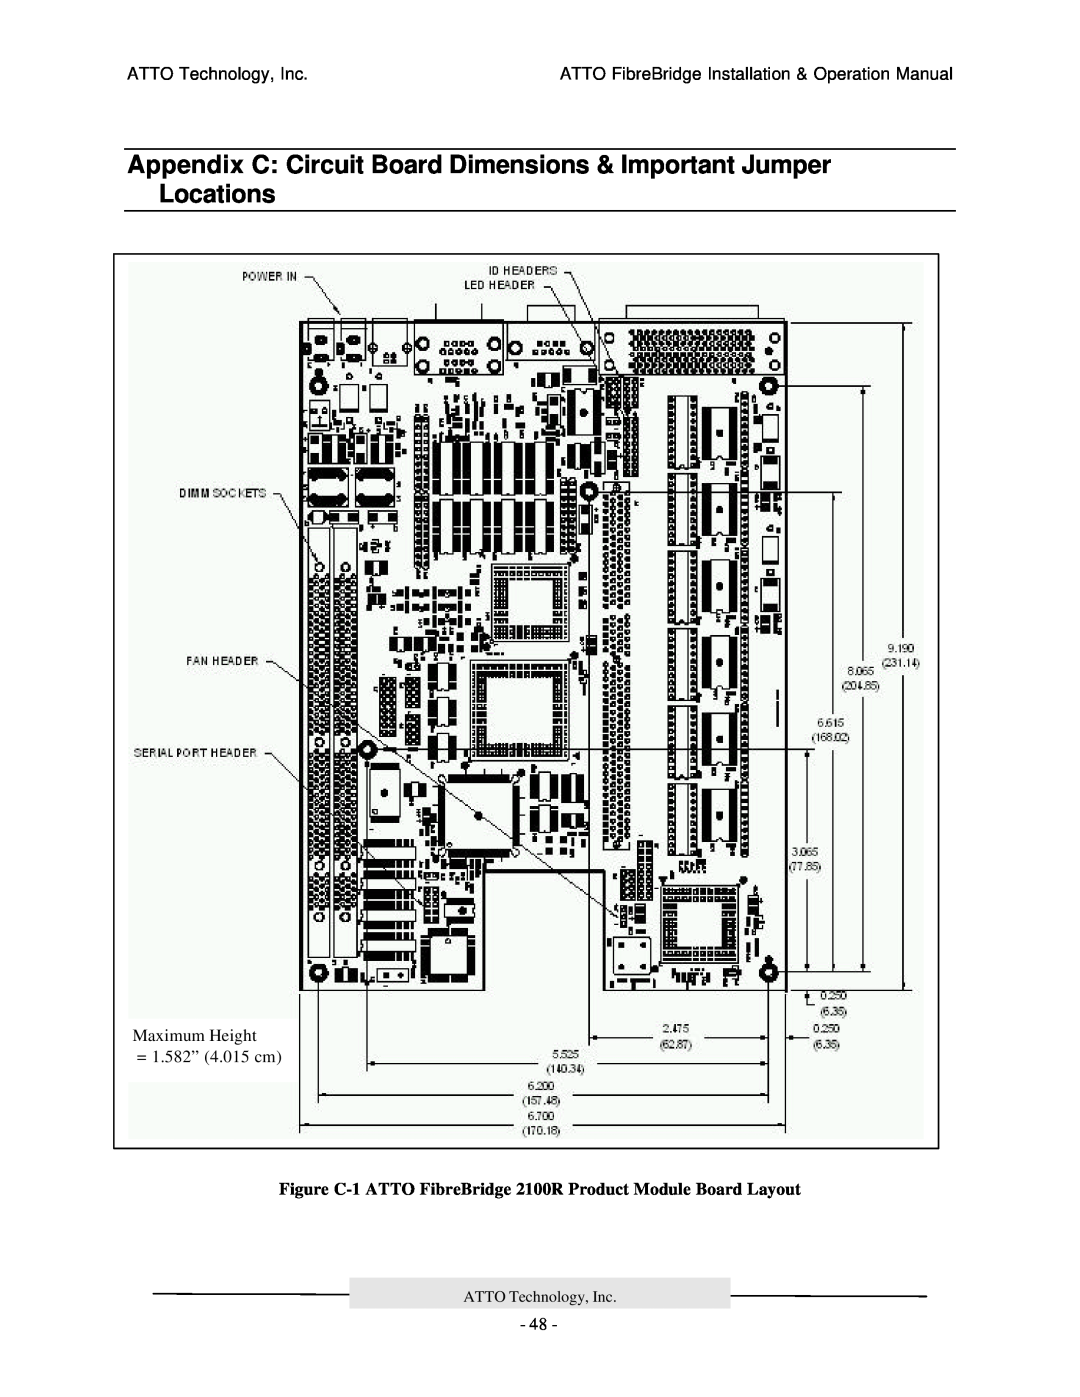 ATTO Technology 2200R/D, 3200R, 2100R manual Appendix C Circuit Board Dimensions & Important Jumper Locations 